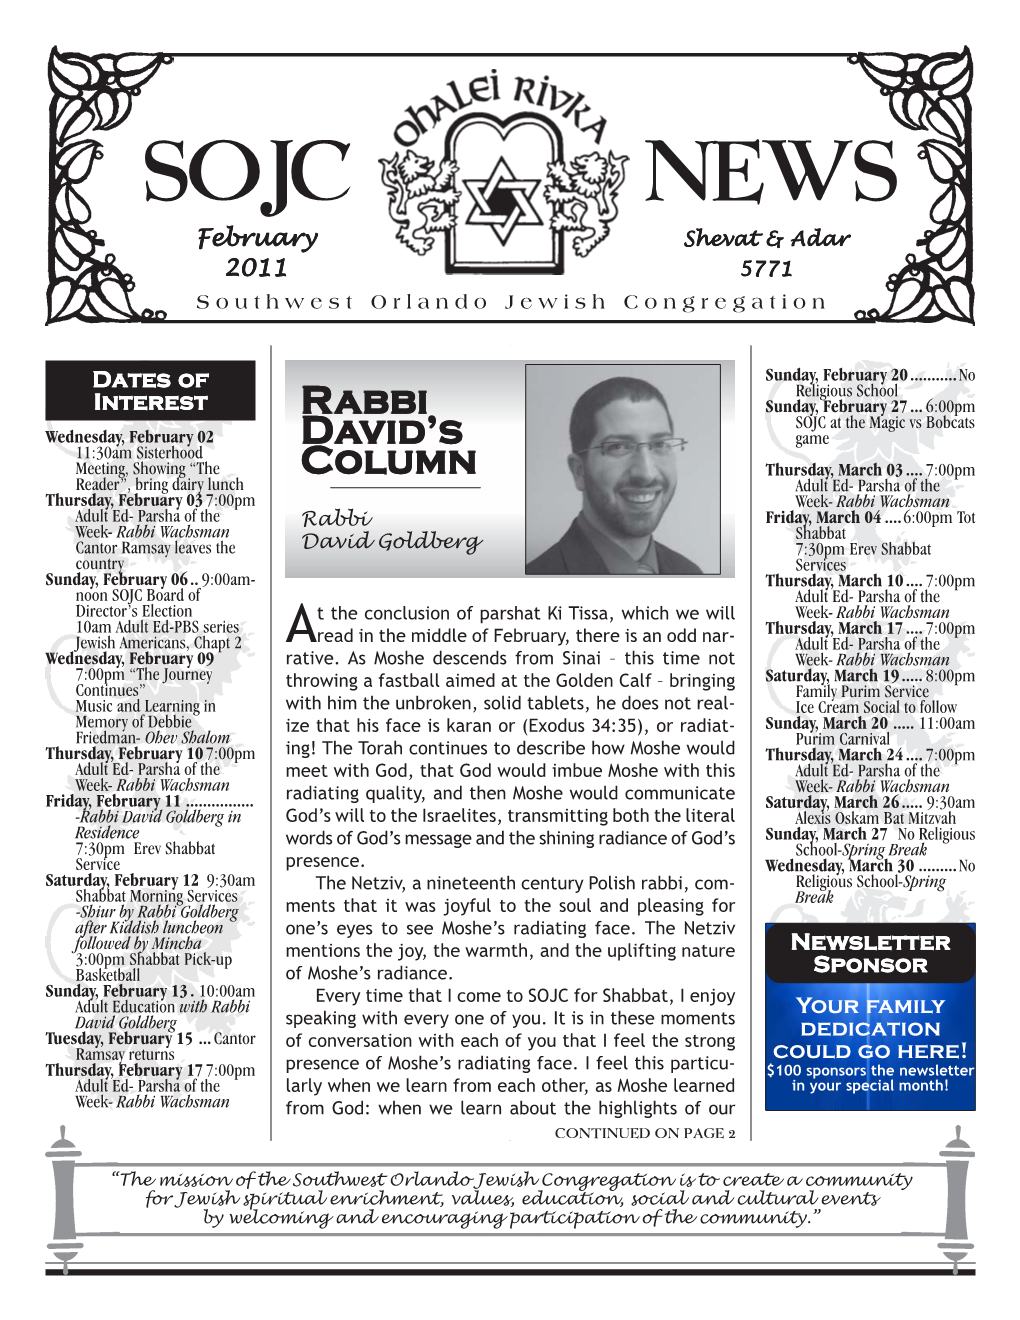 SOJC NEWS 1 SOJC NEWS February Shevat & Adar 2011 5771 Southwest Orlando Jewish Congregation